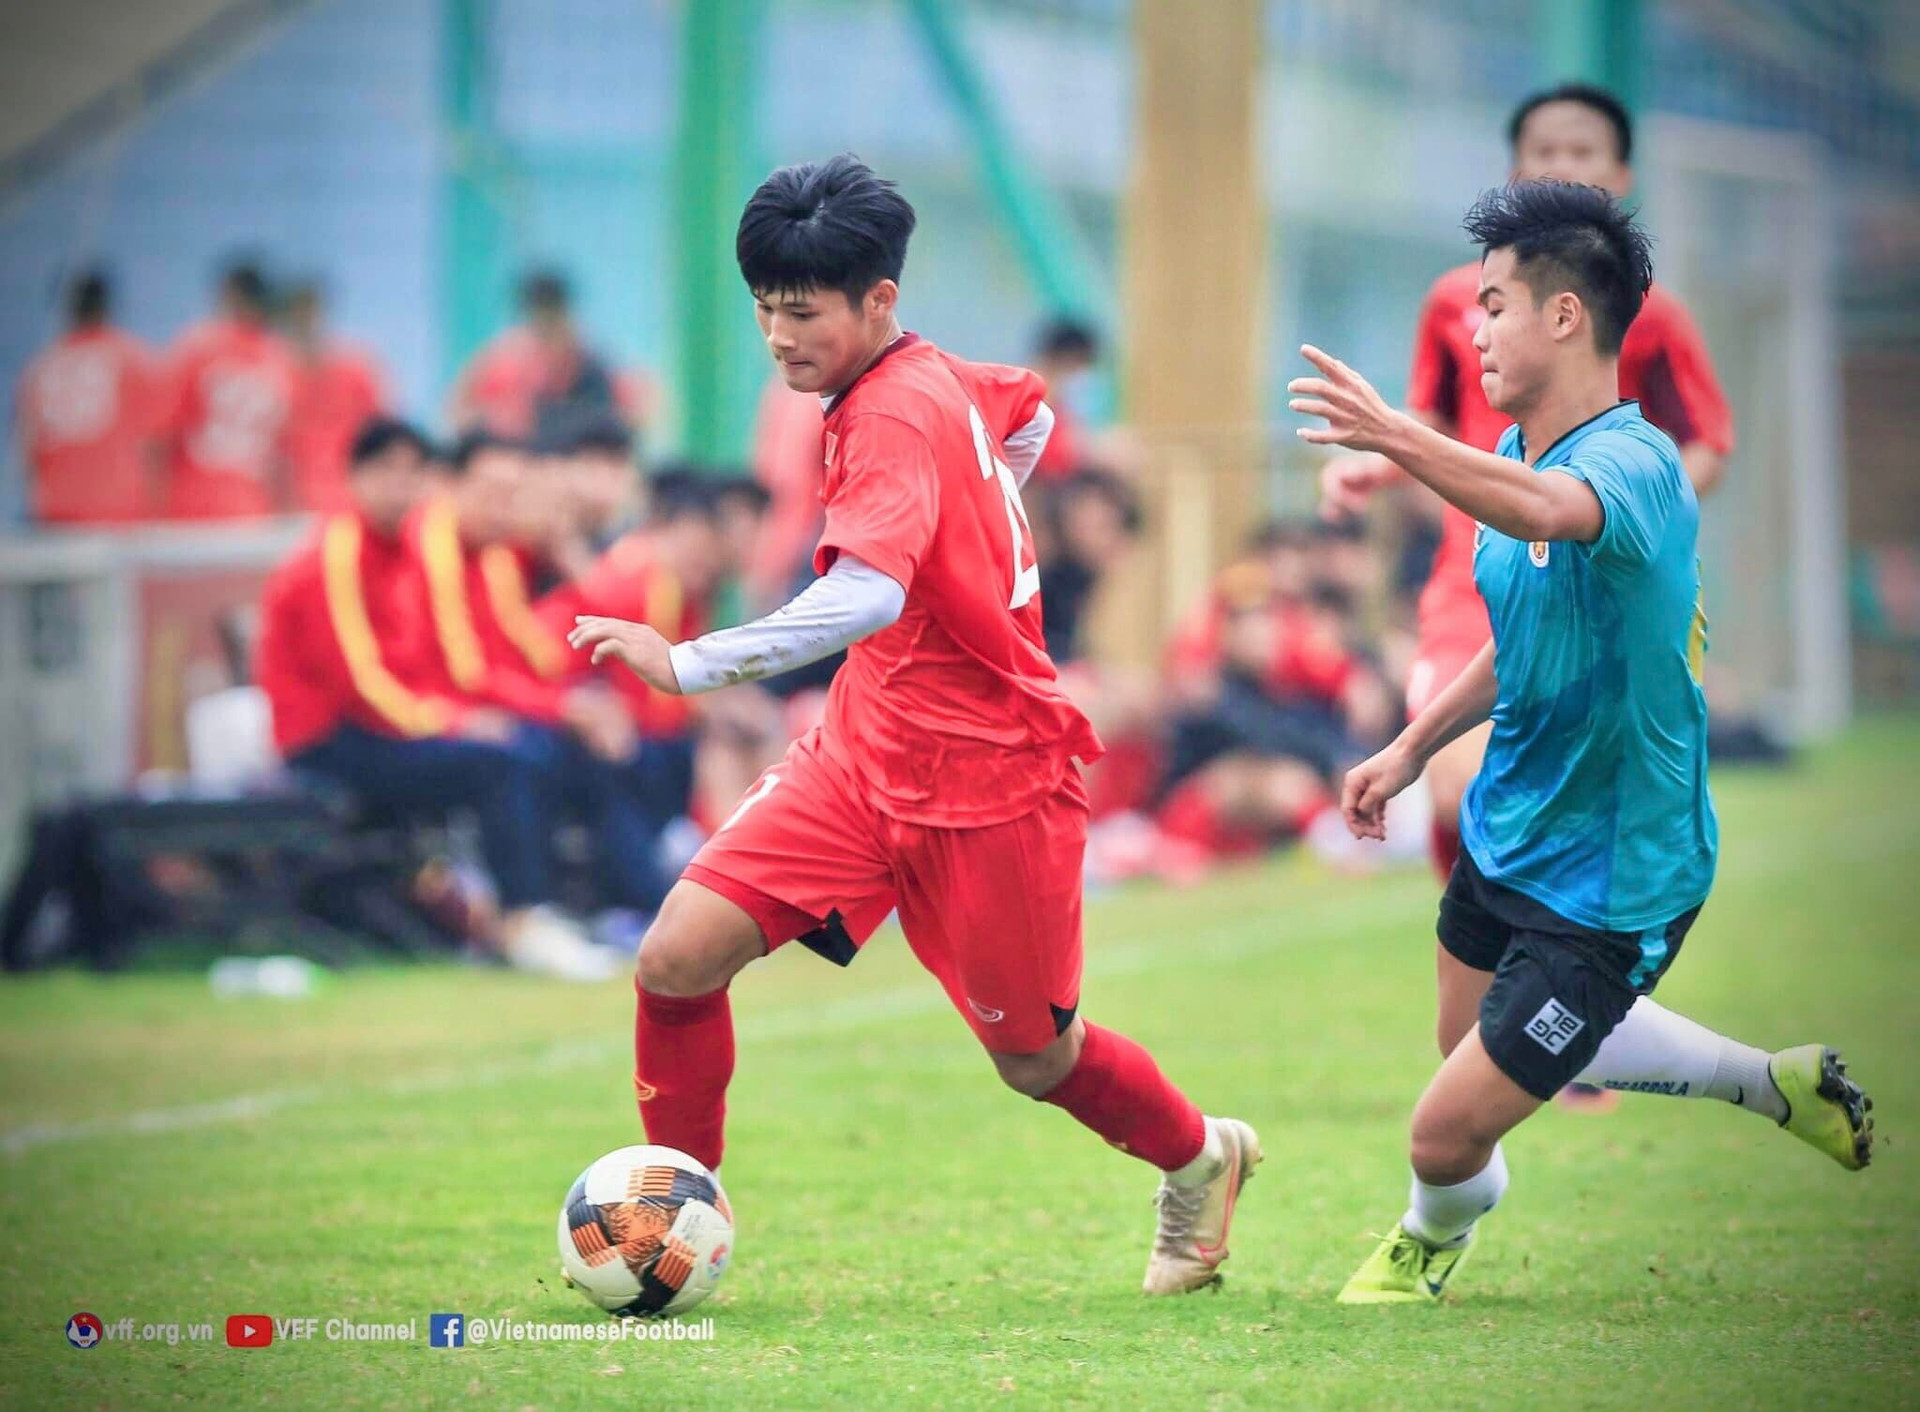 Dinh Long Vu เป็นหนึ่งใน 60 นักเตะดาวรุ่งที่มีความสามารถดีที่สุดในฟุตบอลโลกปี 2023